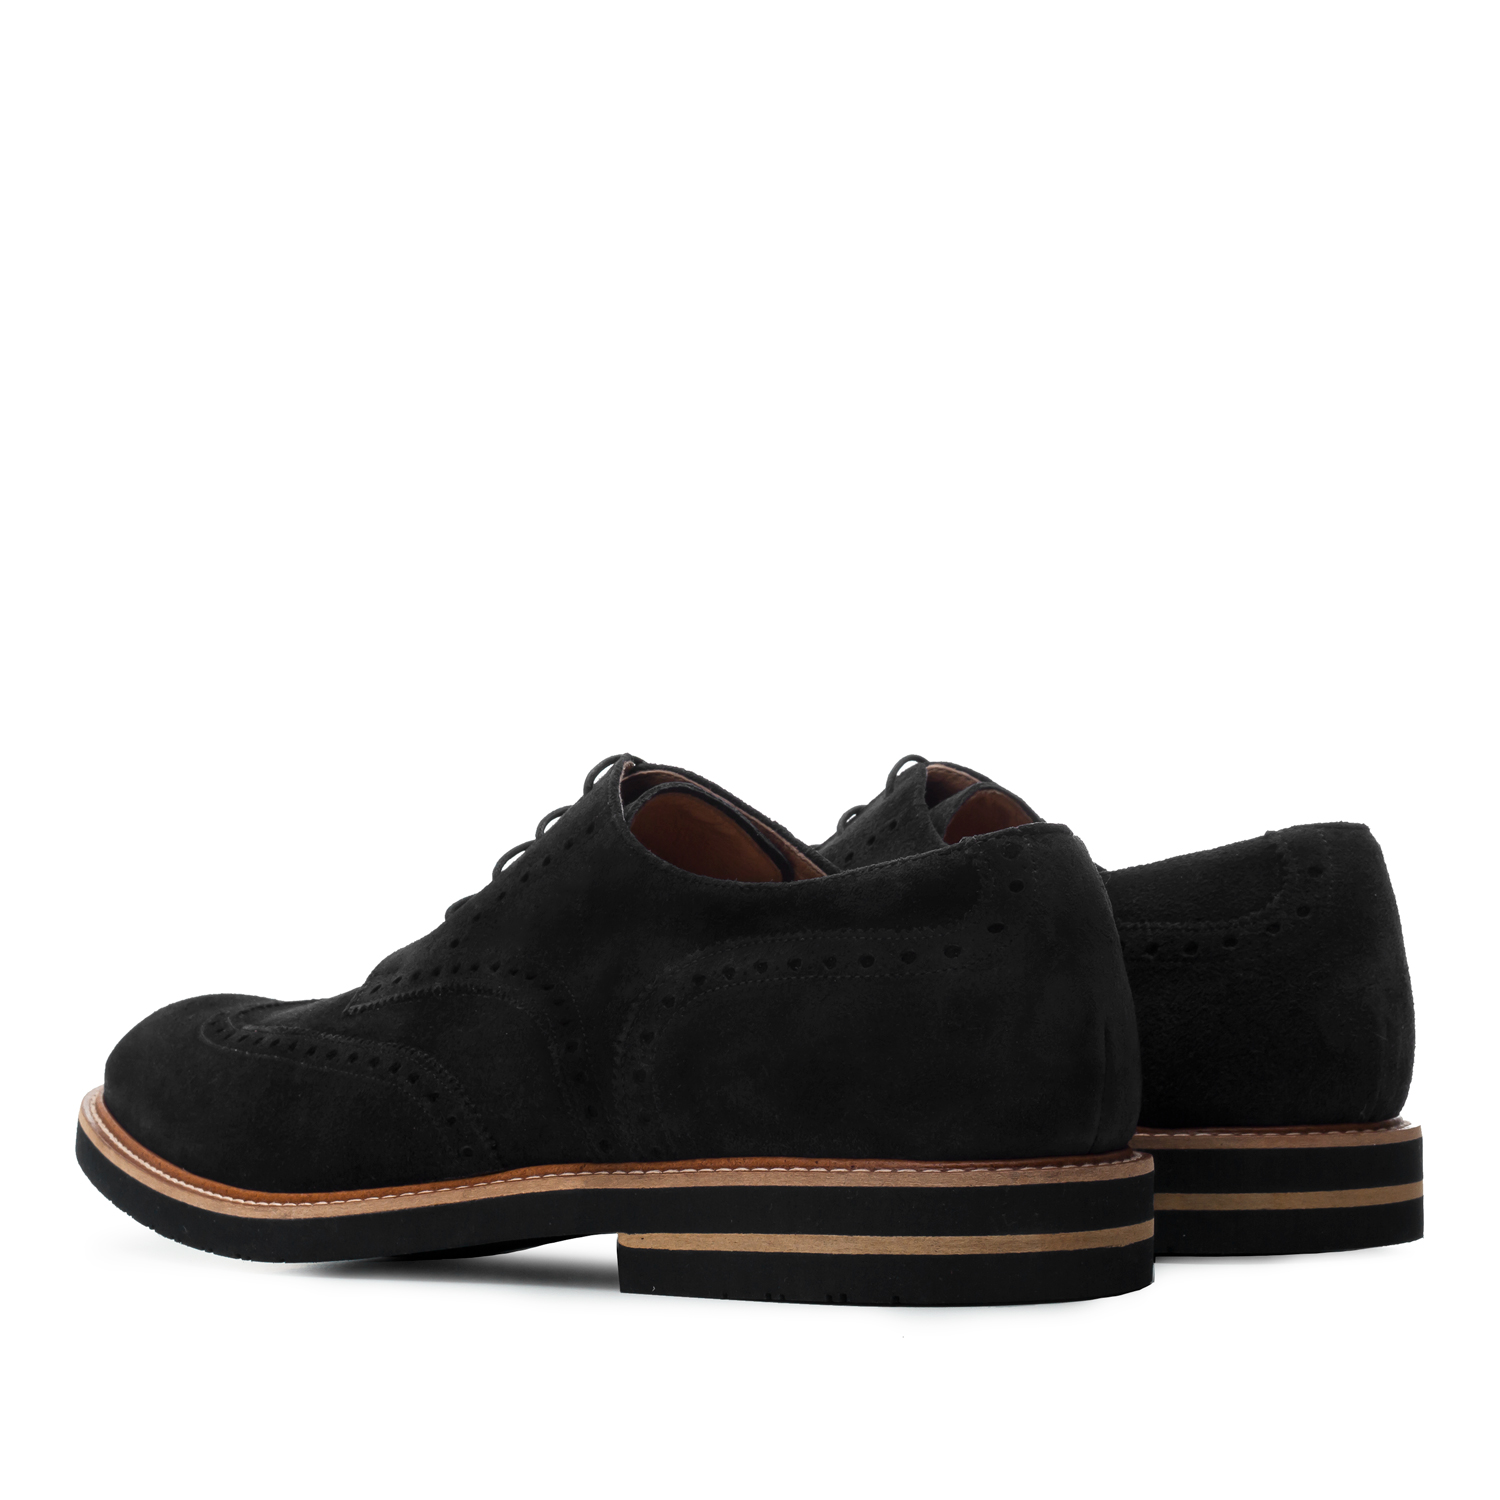 Chaussures Style Oxford cuir suéde Noir 